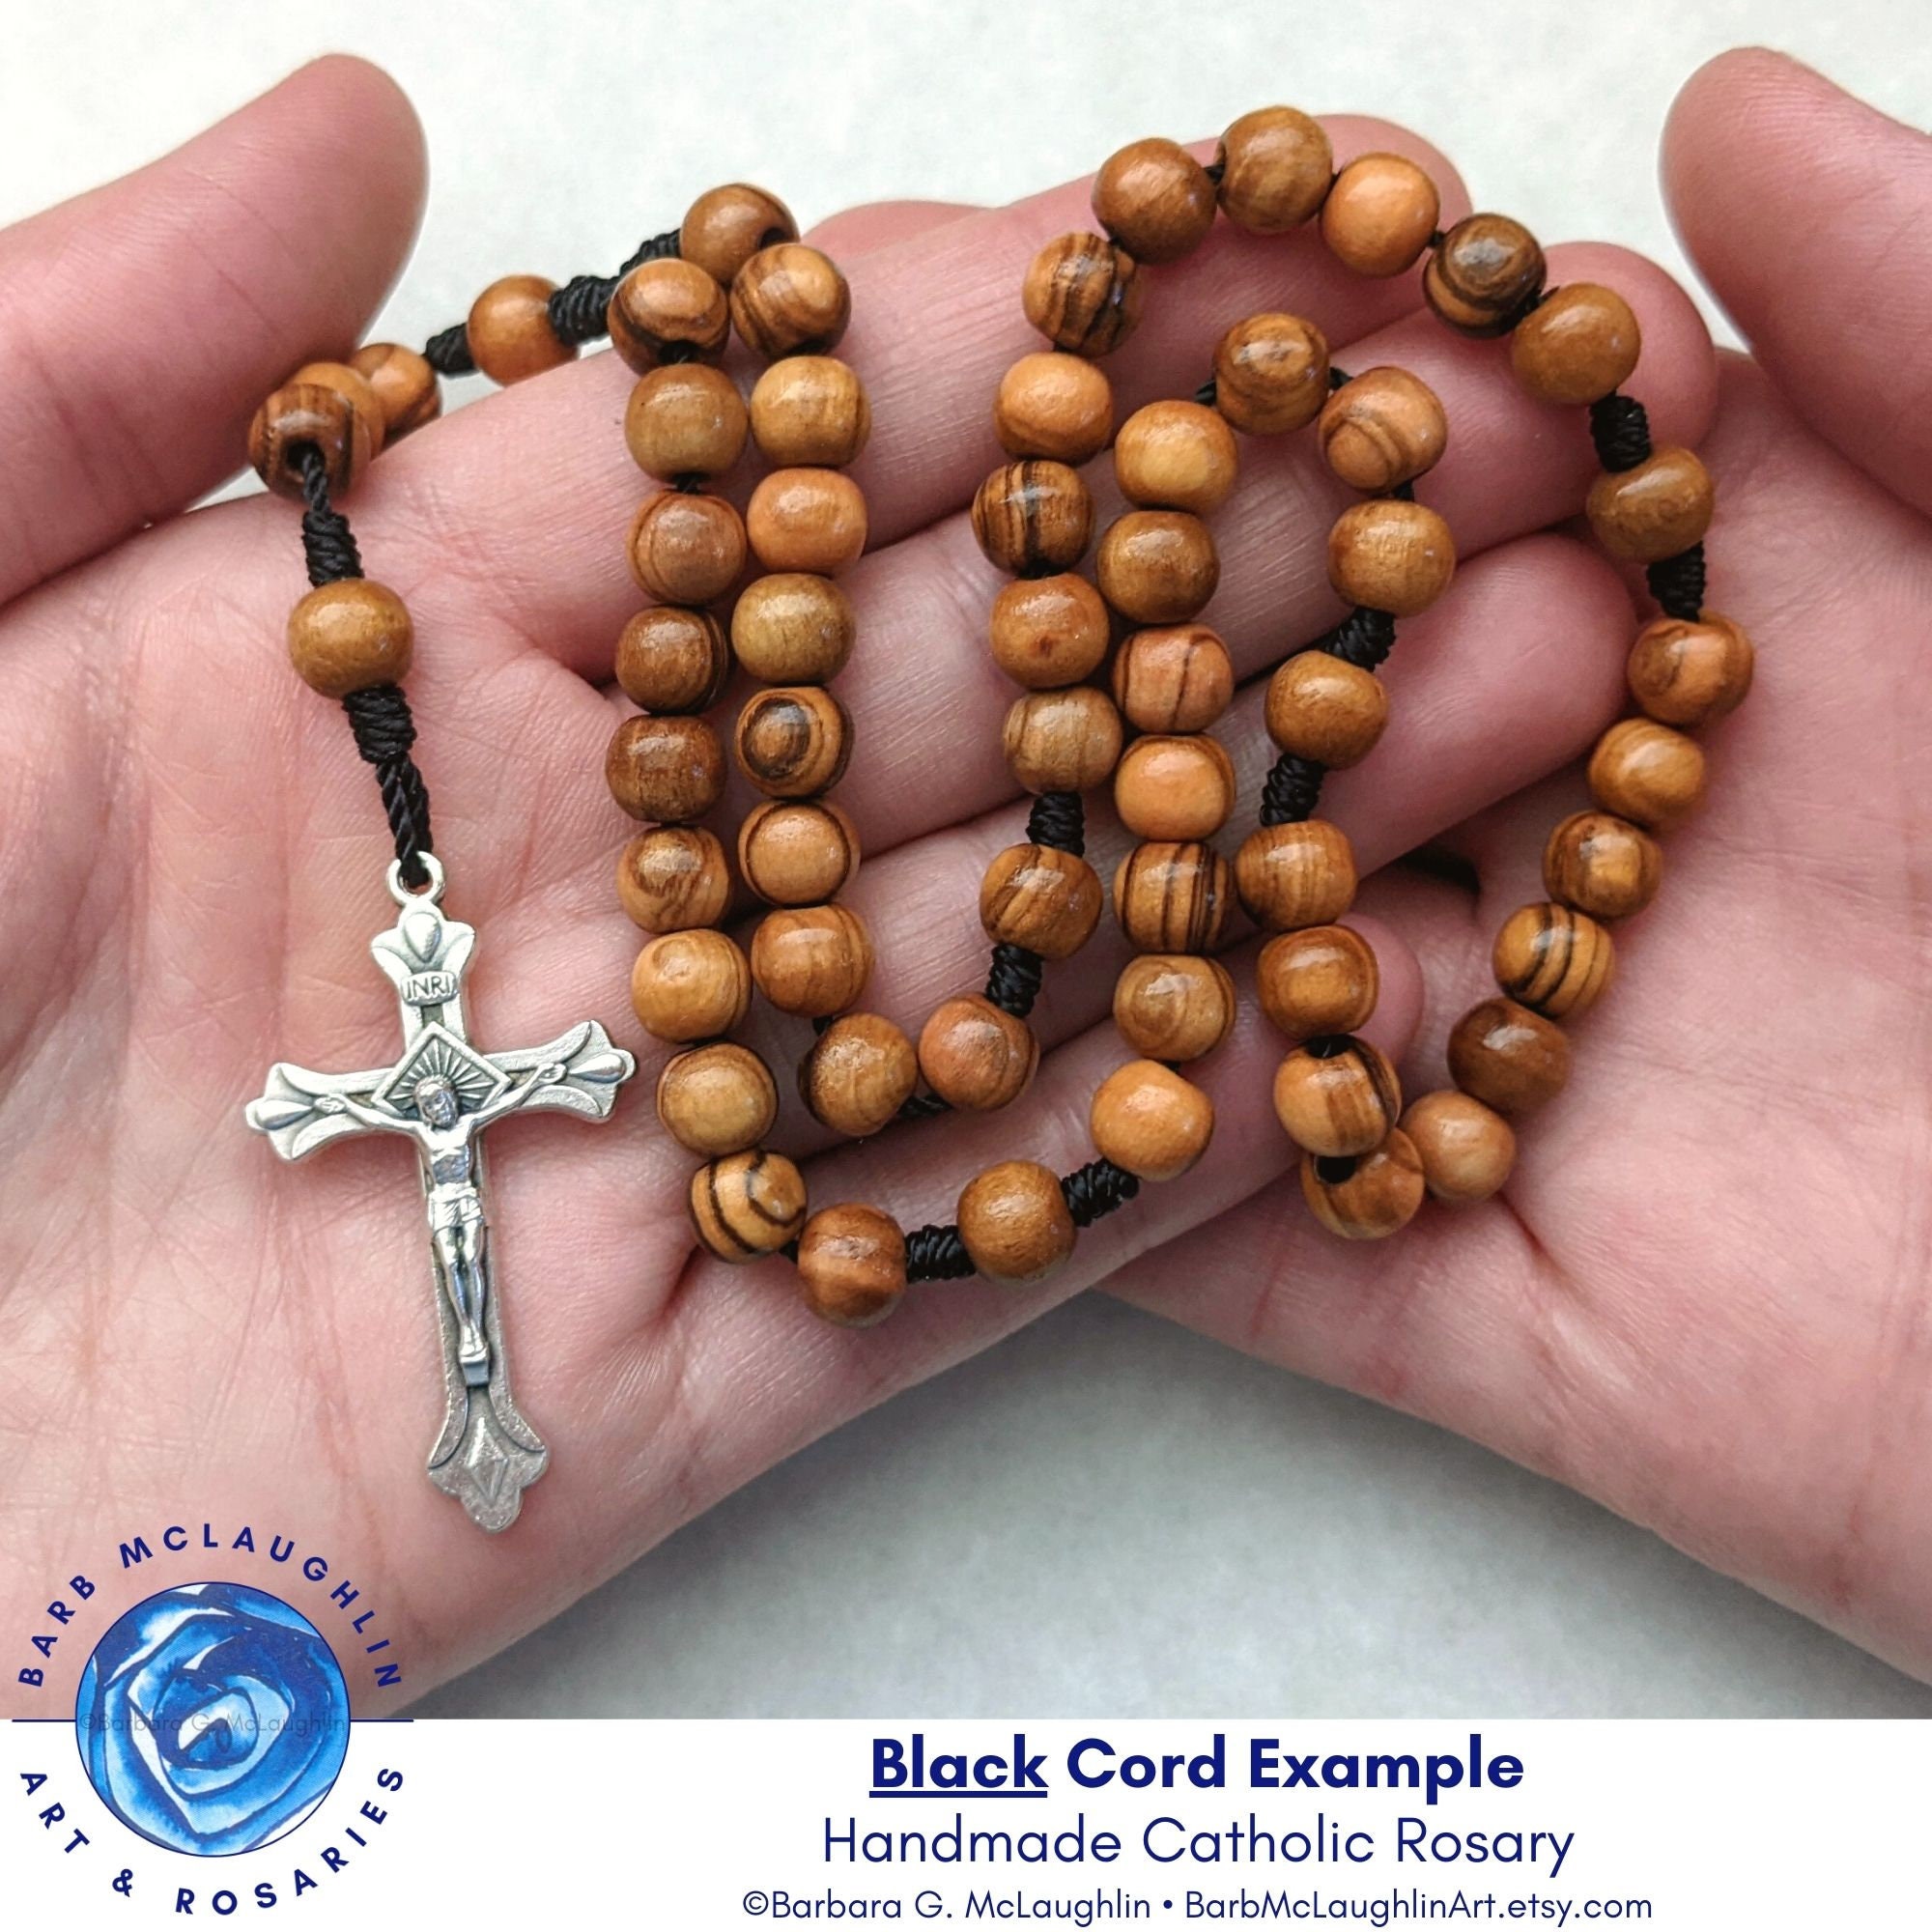 Handmade Catholic Rosary With 7mm Olive Wood Rosary Beads, Metal